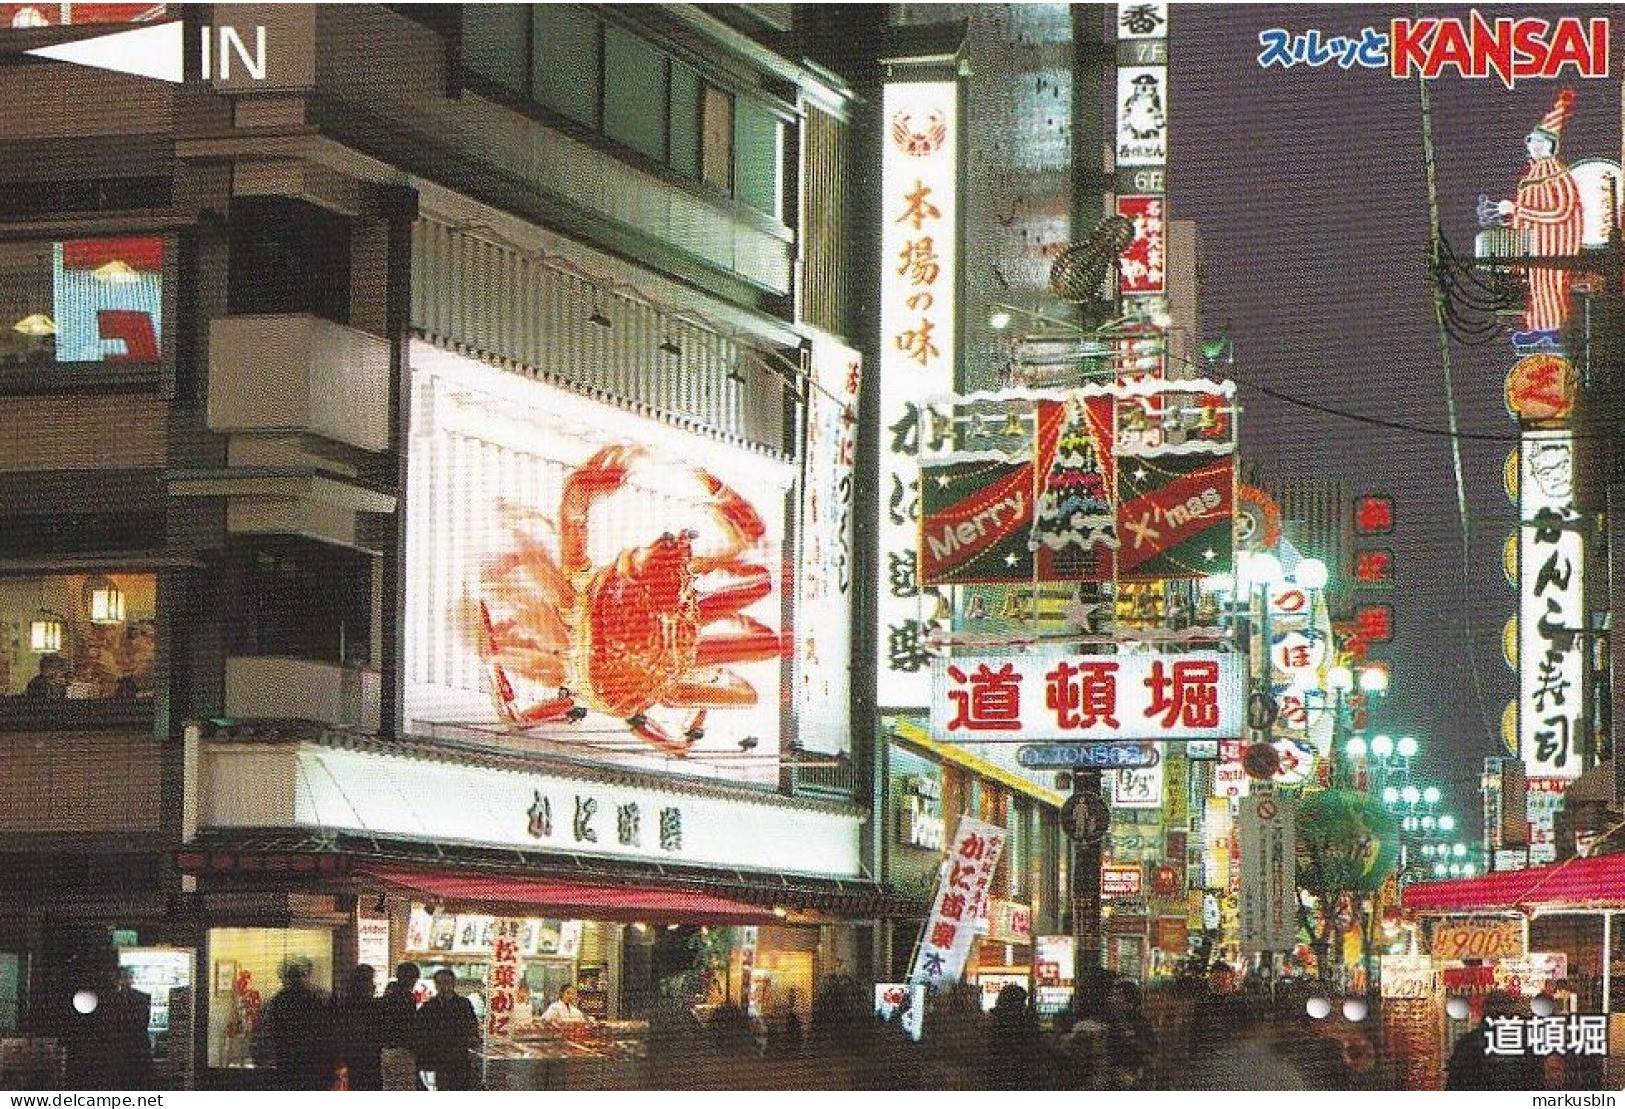 Japan Prepaid Kansai Card 3000 - Merry Christmas Decoration Street Lights Scene - Japon